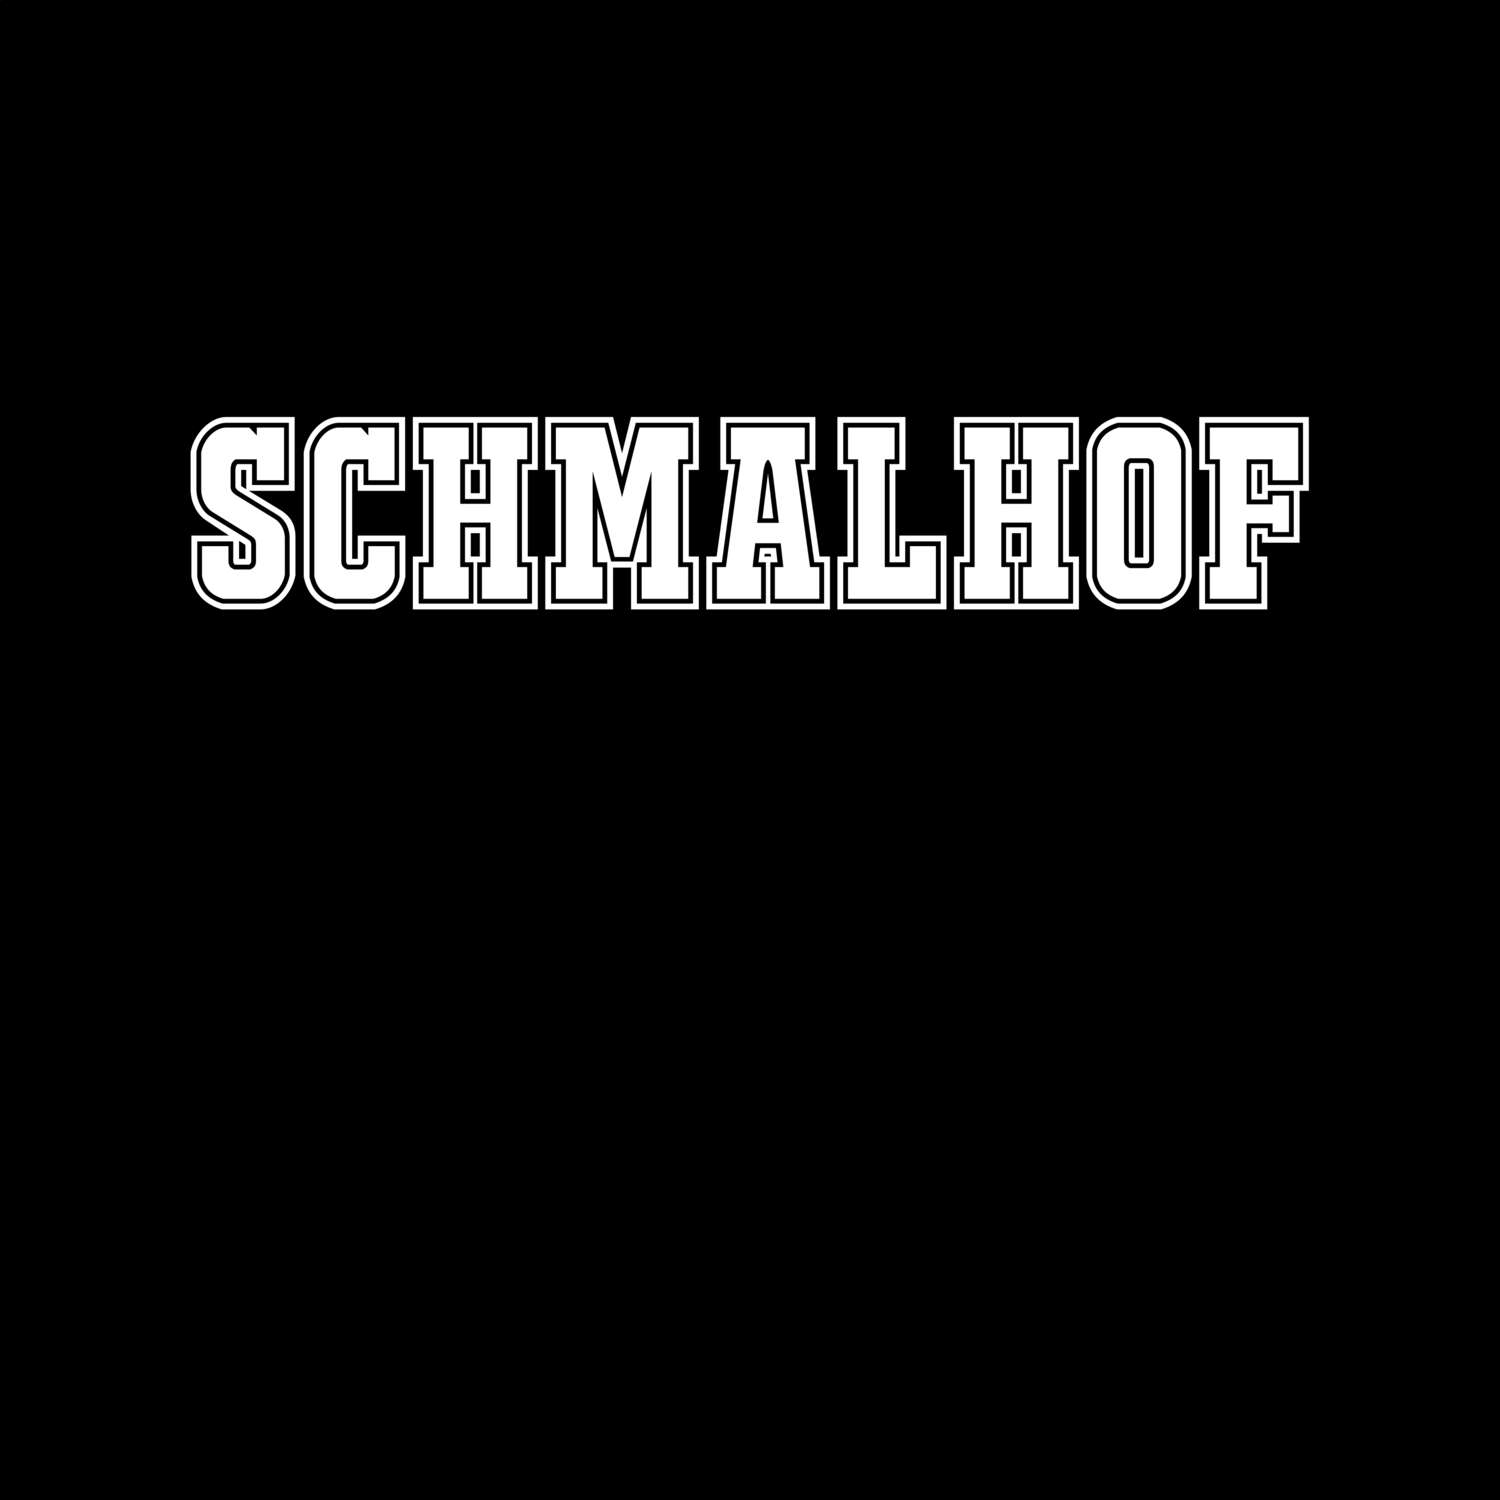 Schmalhof T-Shirt »Classic«